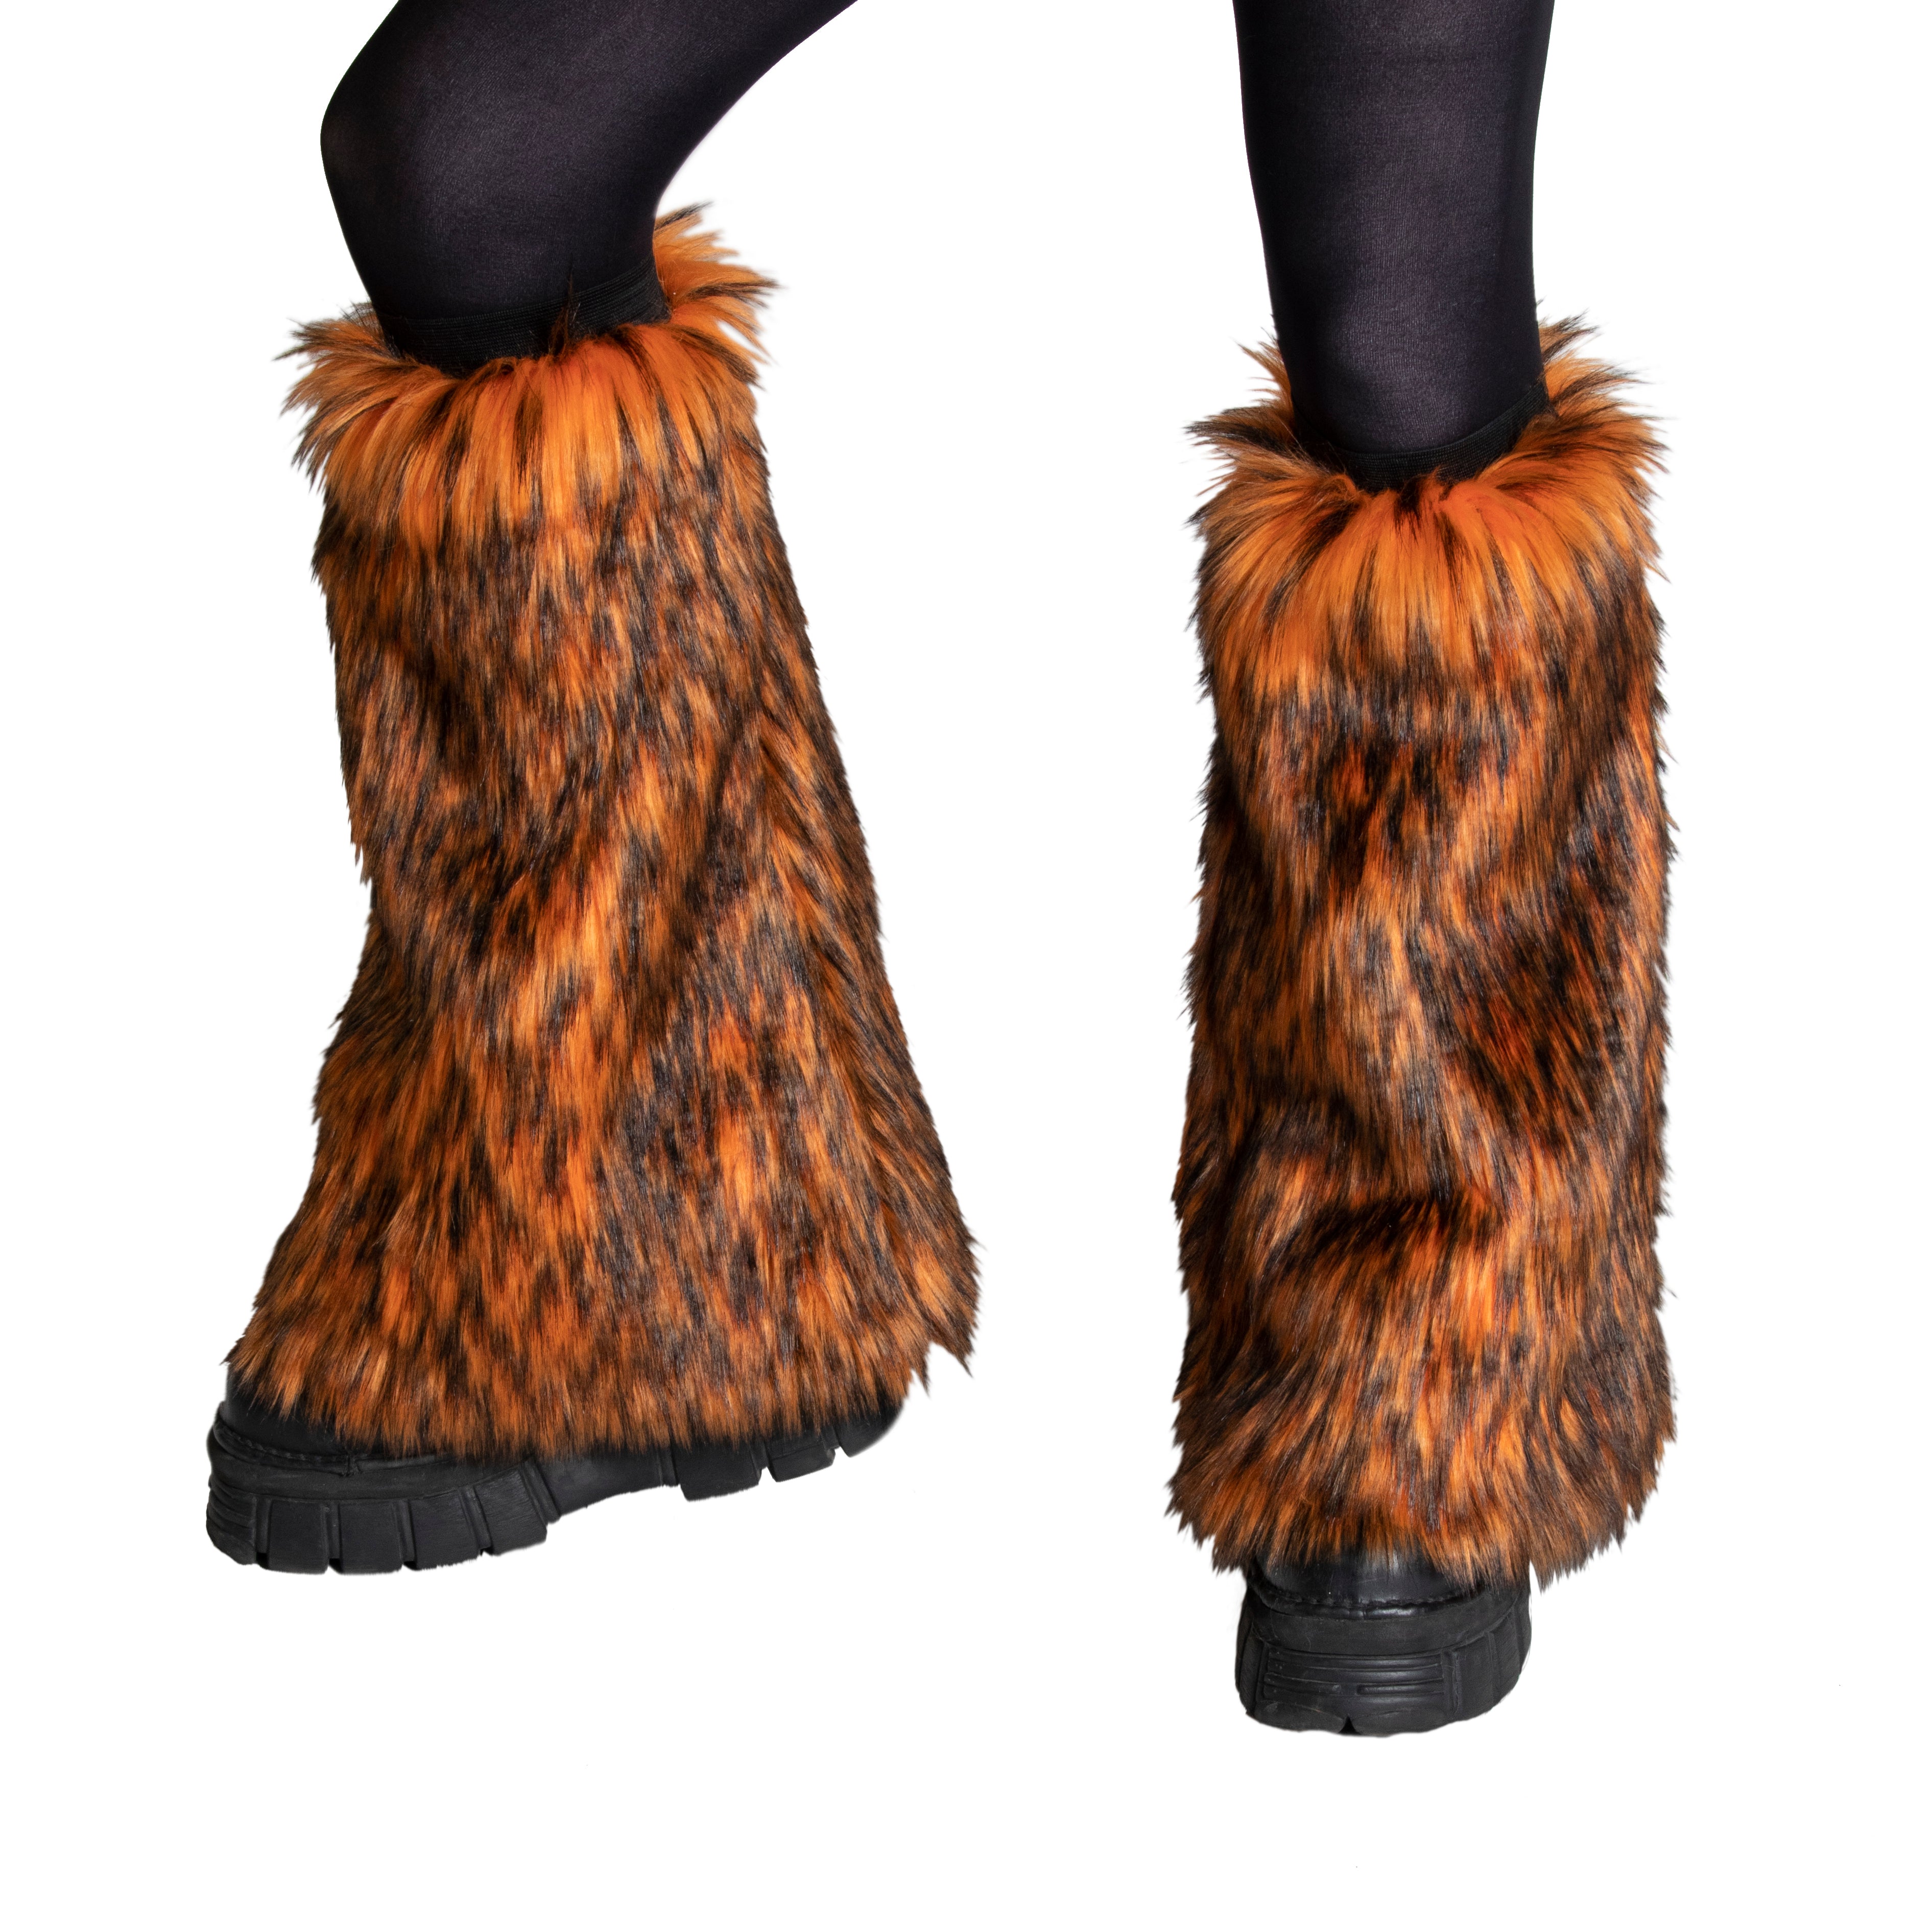 orange Pawstar fluffy leg warmers for danceers, ravers, furries and music festival goers. 